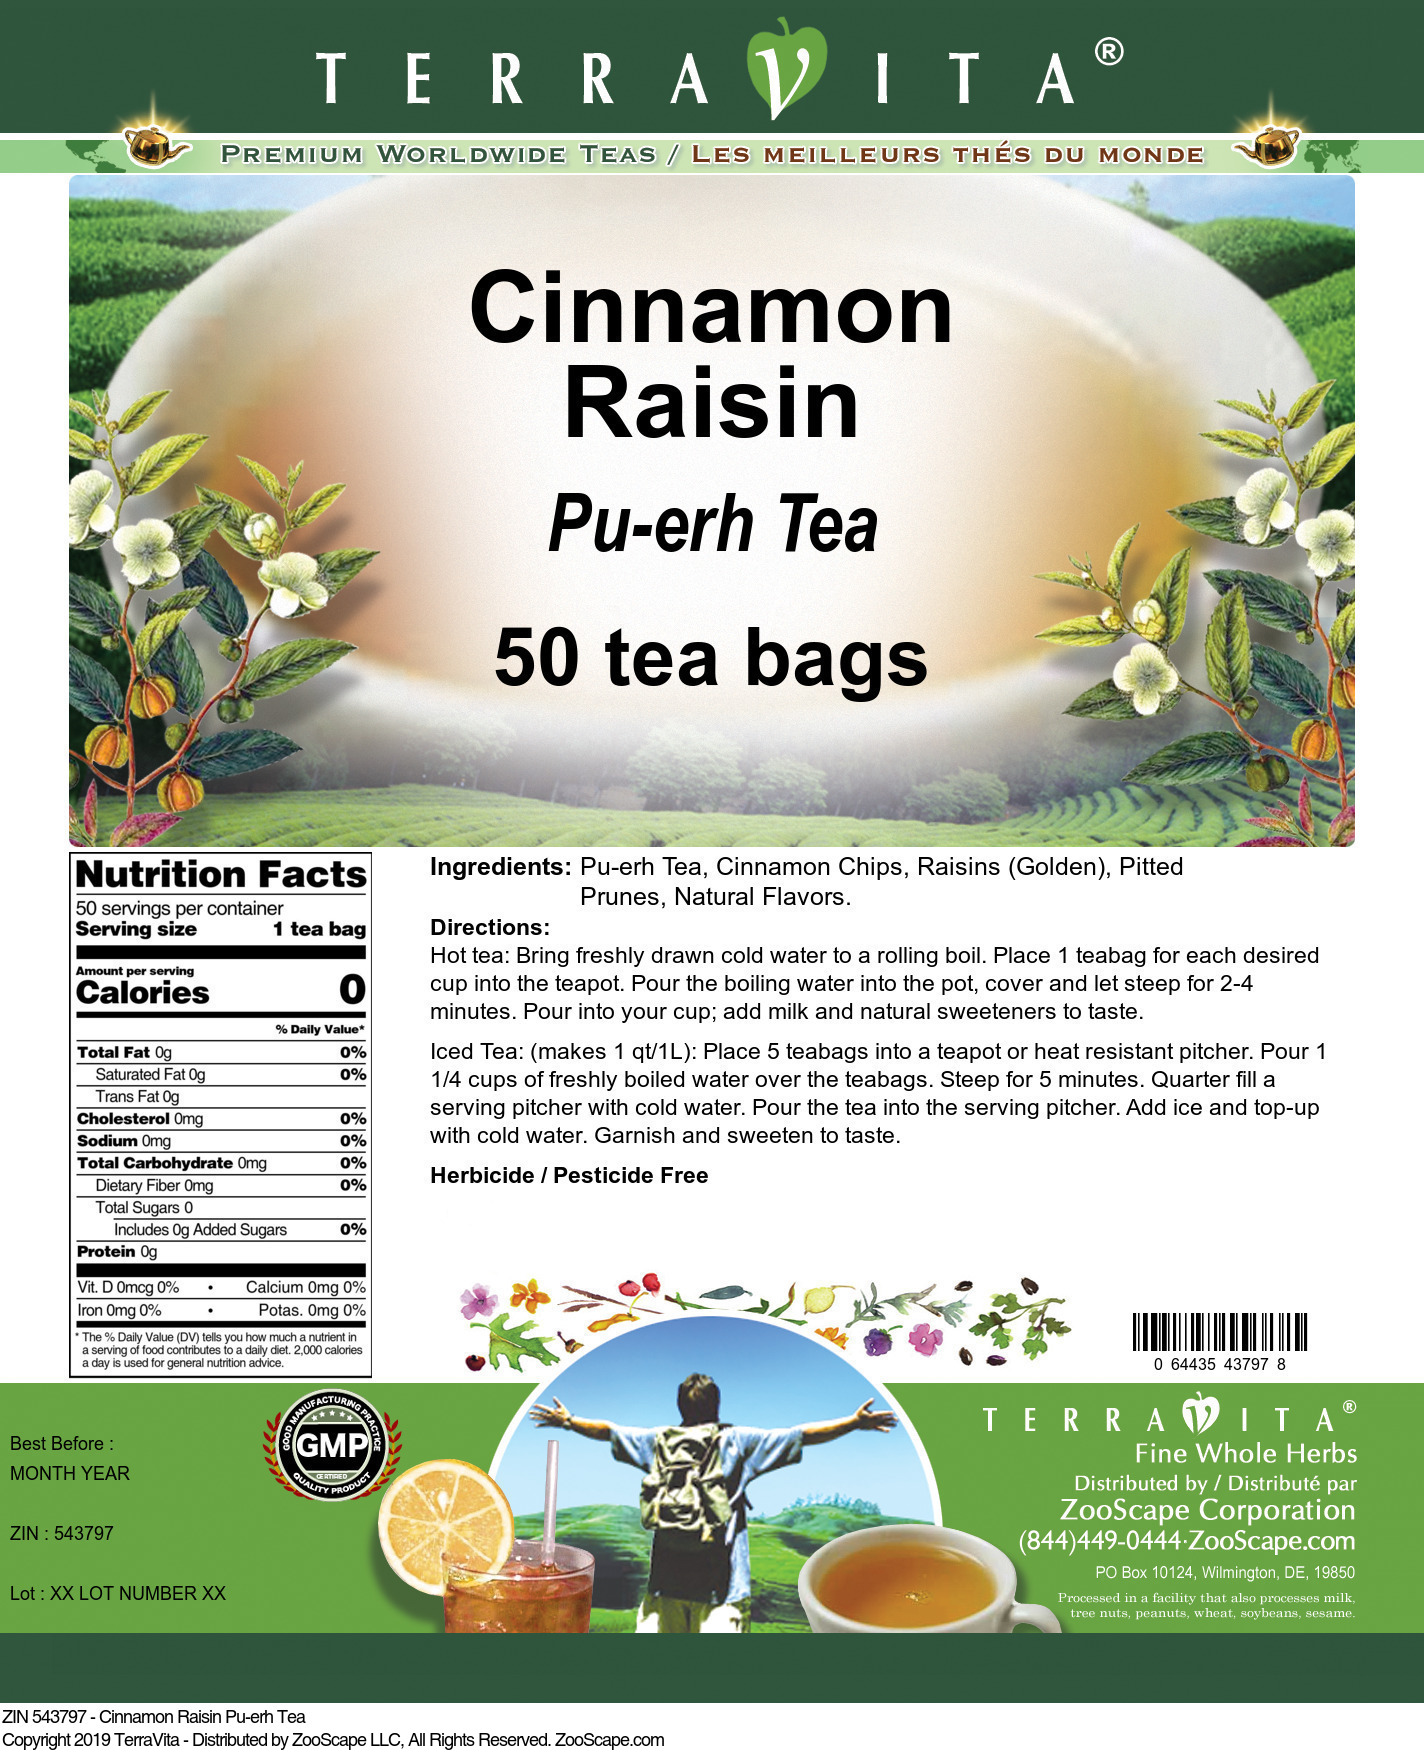 Cinnamon Raisin Pu-erh Tea - Label